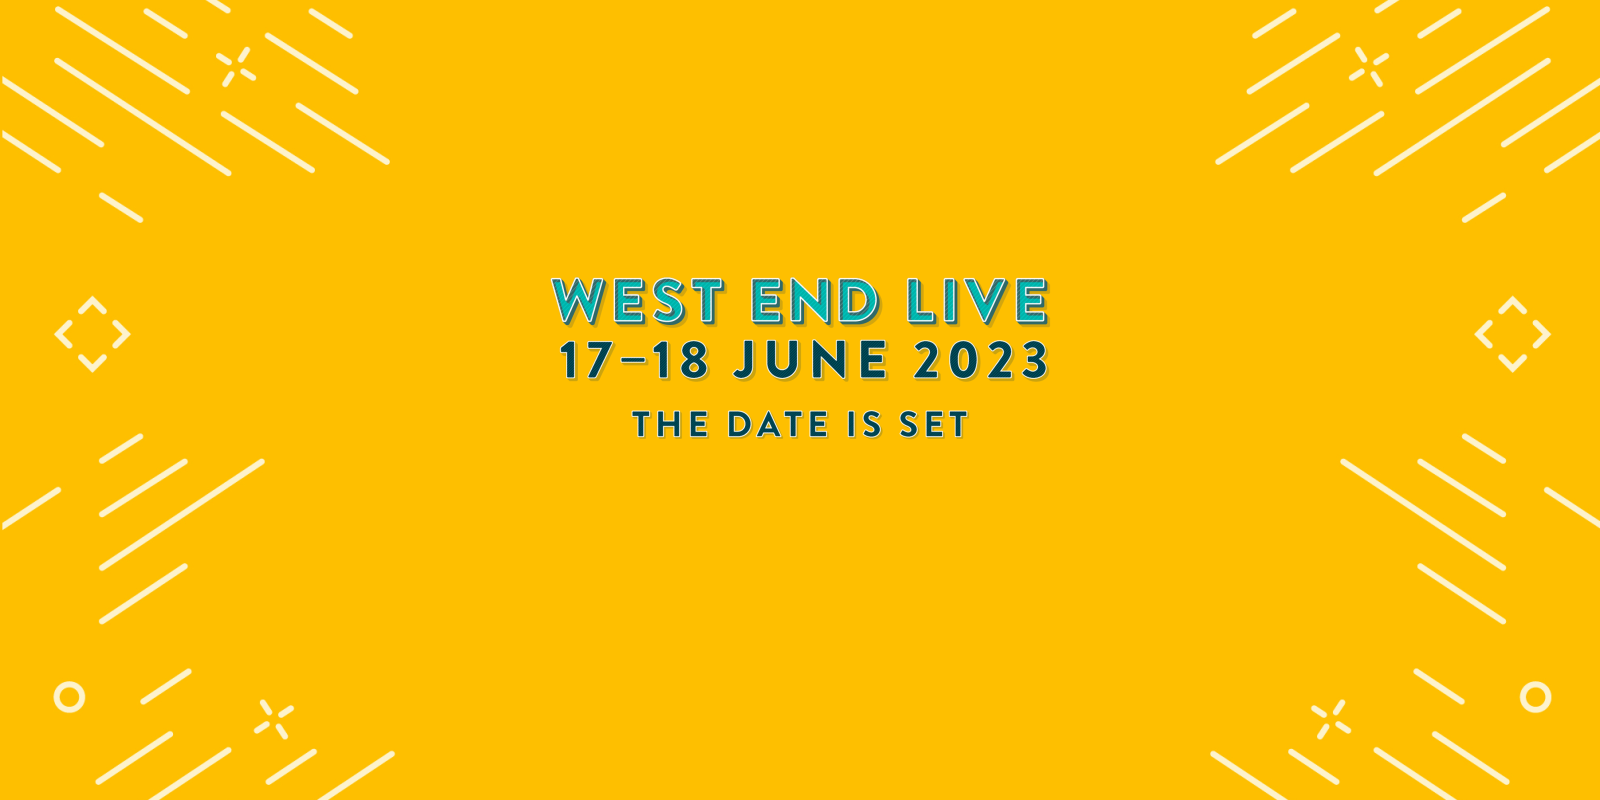 West end live